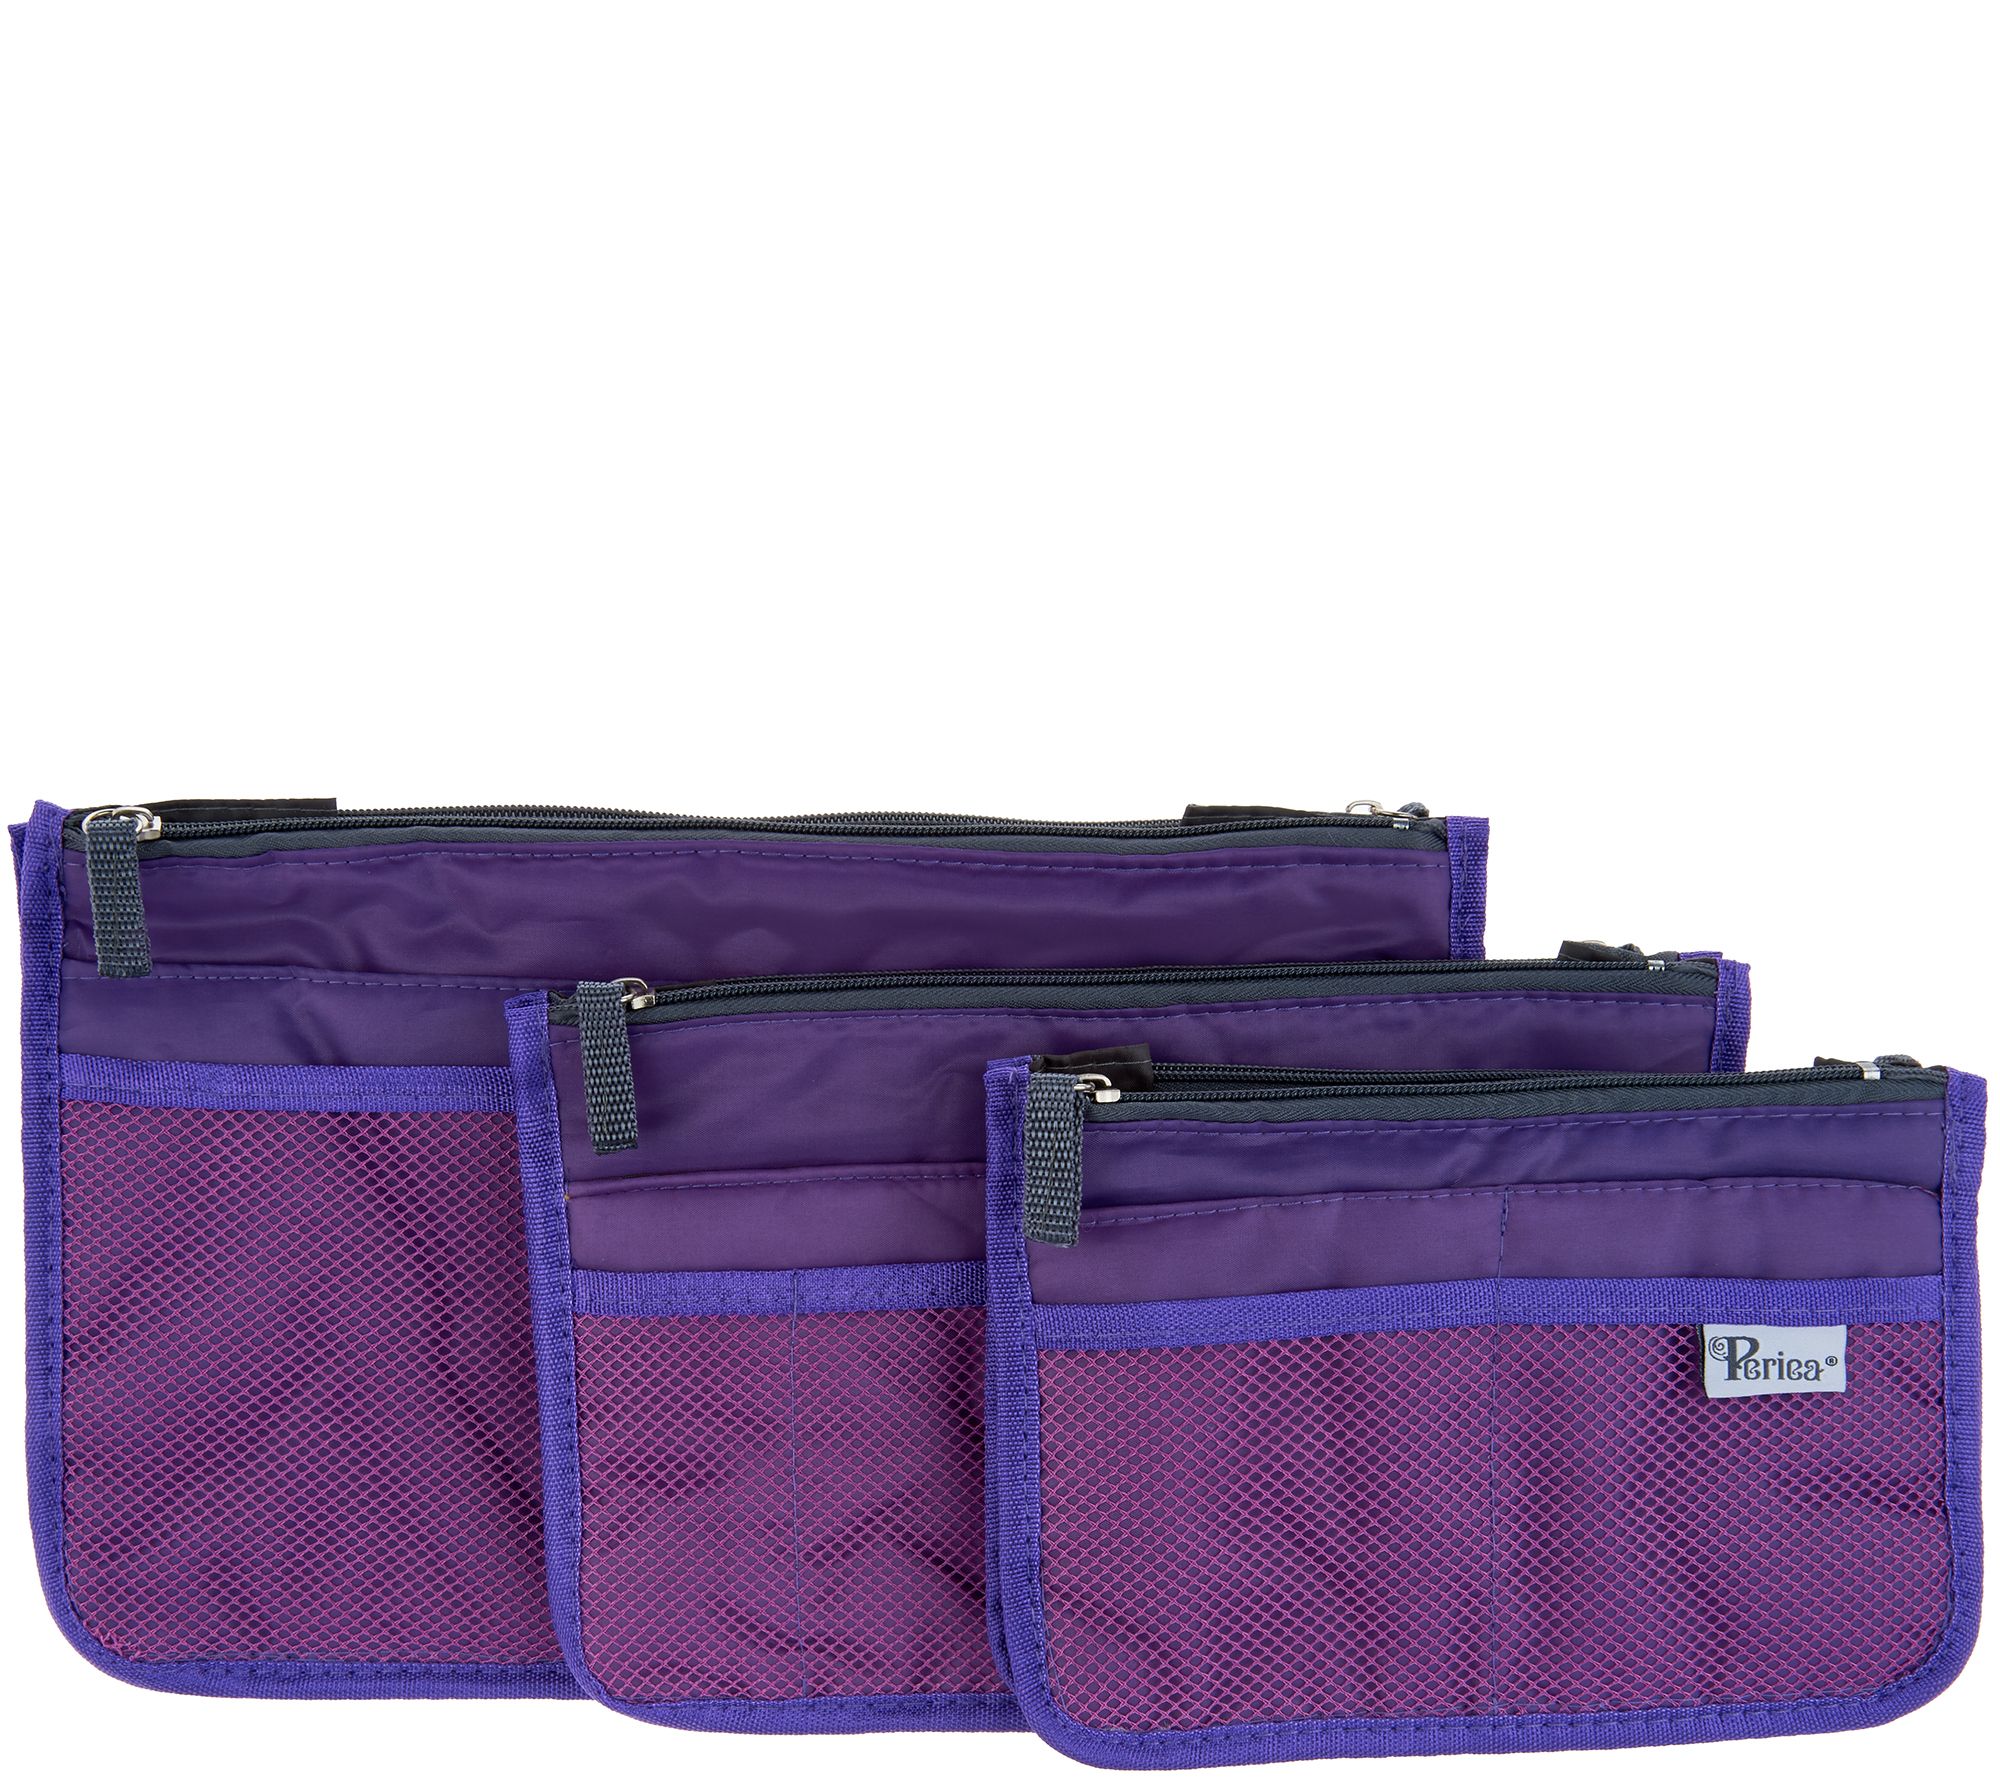 Periea Set of 3 Handbag Organizers with Pockets on QVC 